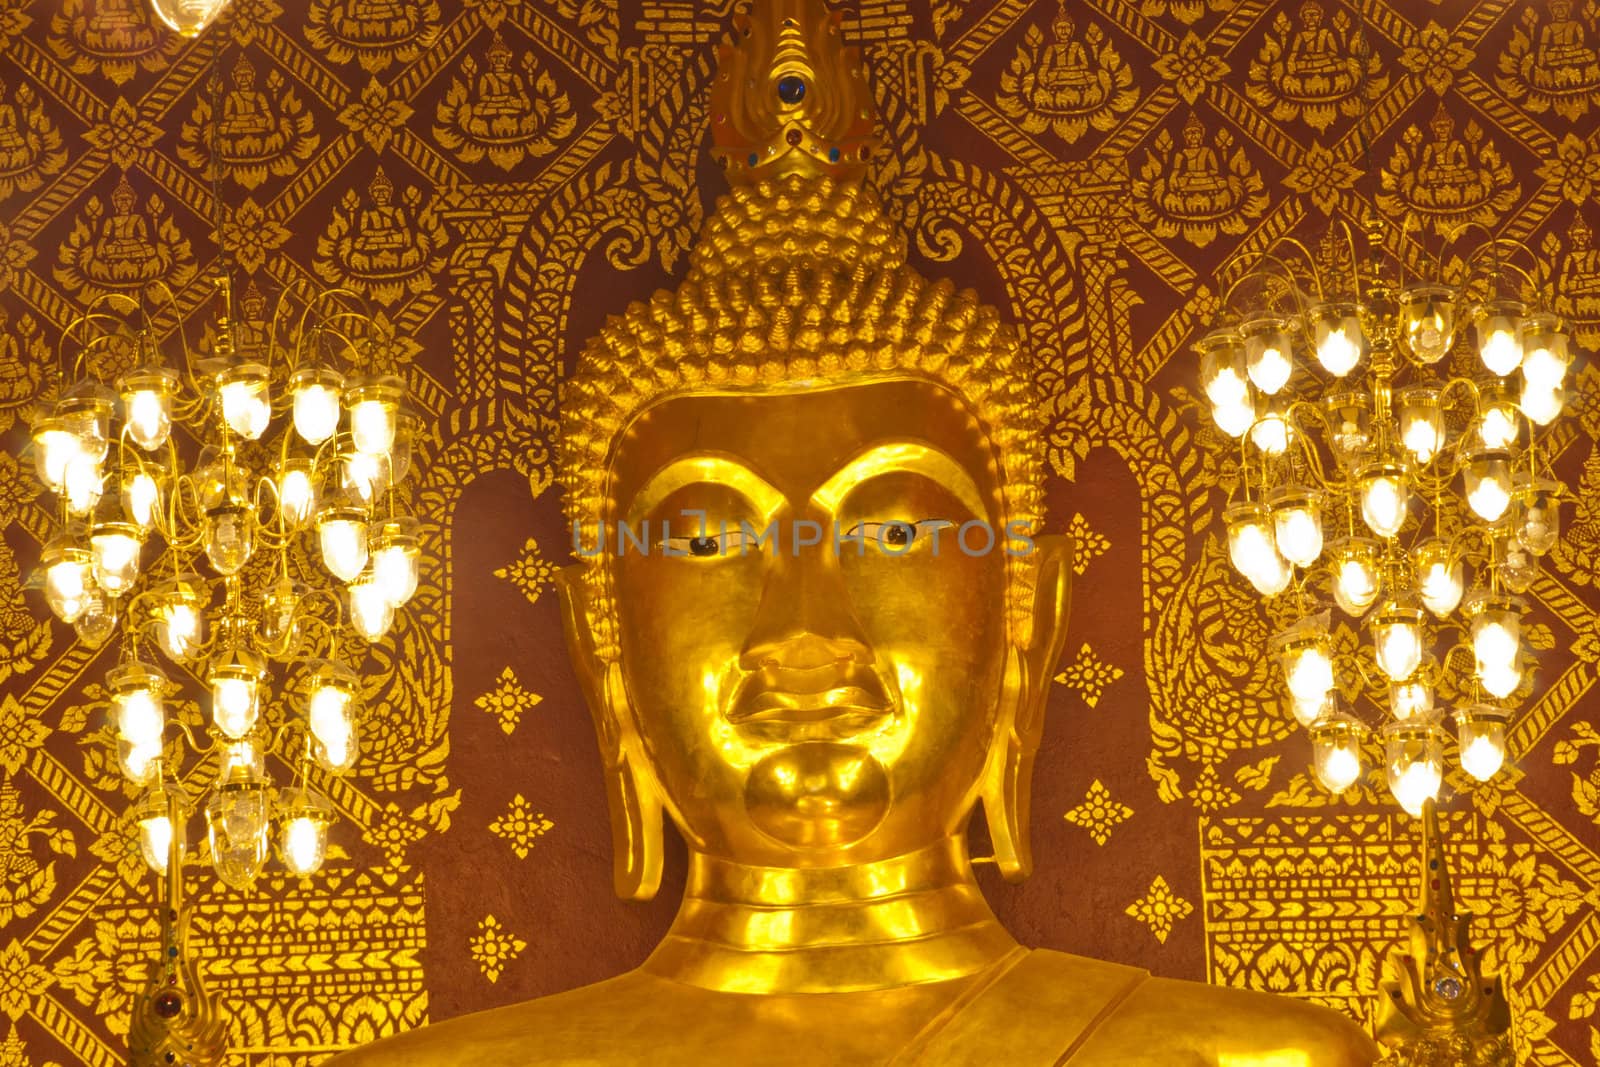 he golden Buddha statue in the church, Thailand